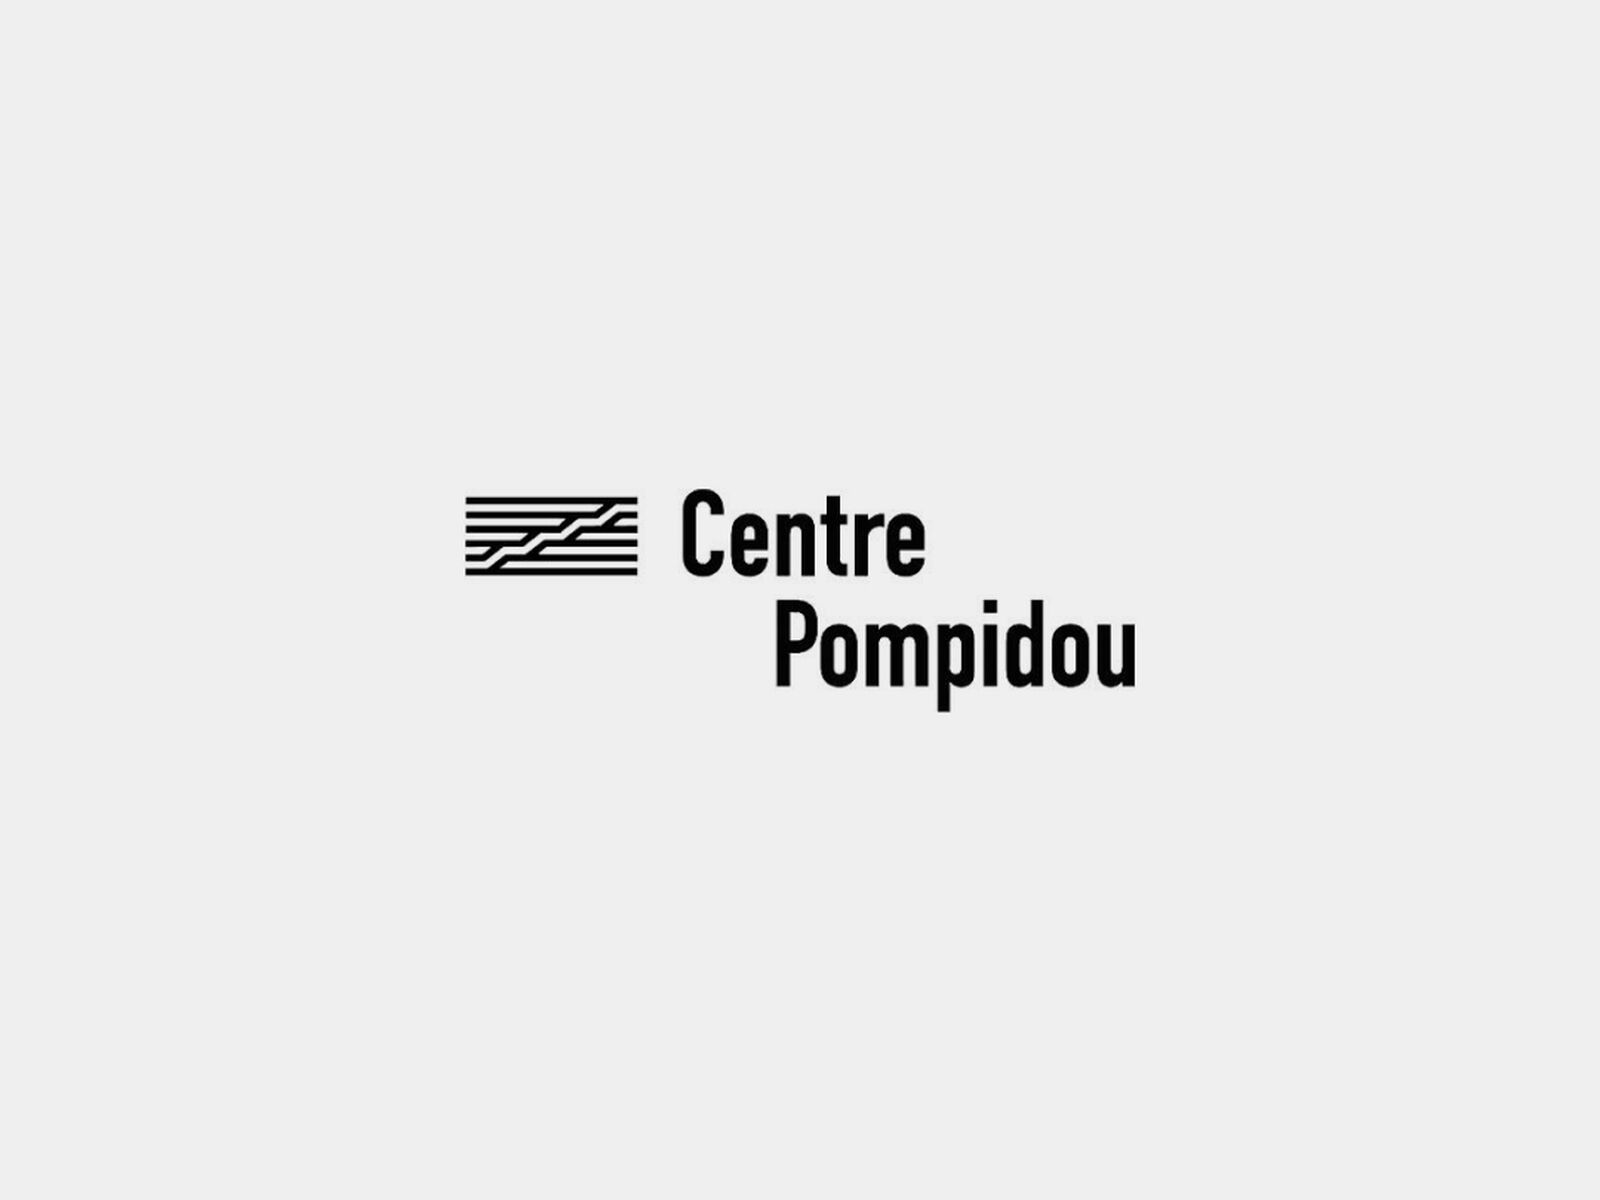 FLOS_Museum-Exhibition_Centre-pompidou-Paris